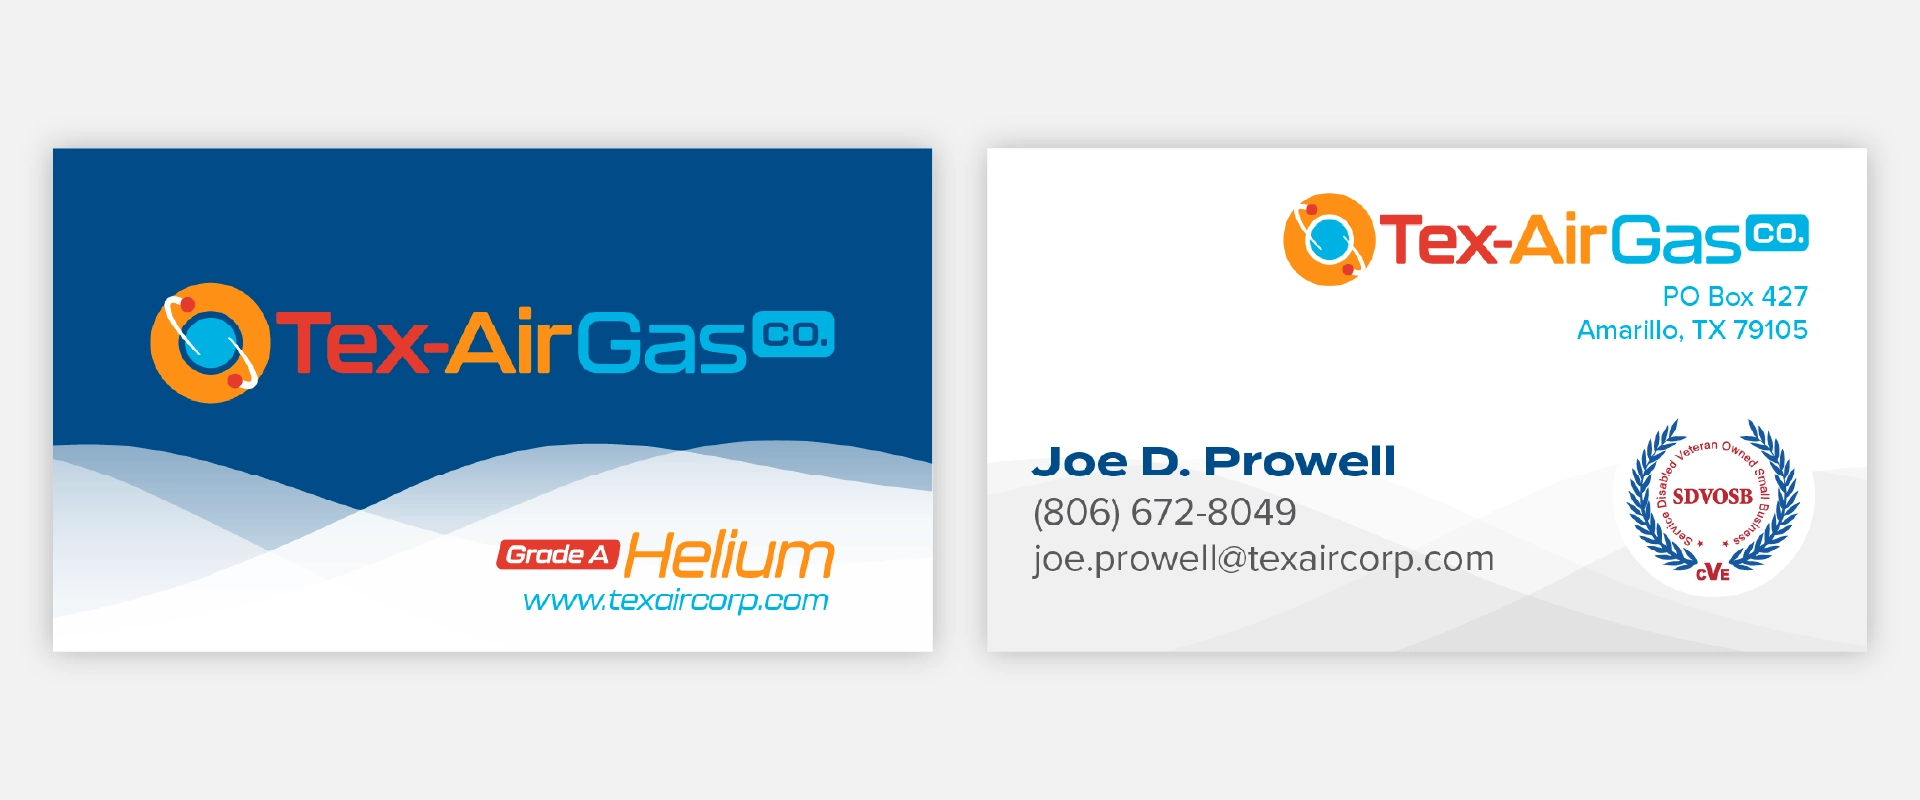 Tex Air Gas Co. business cards